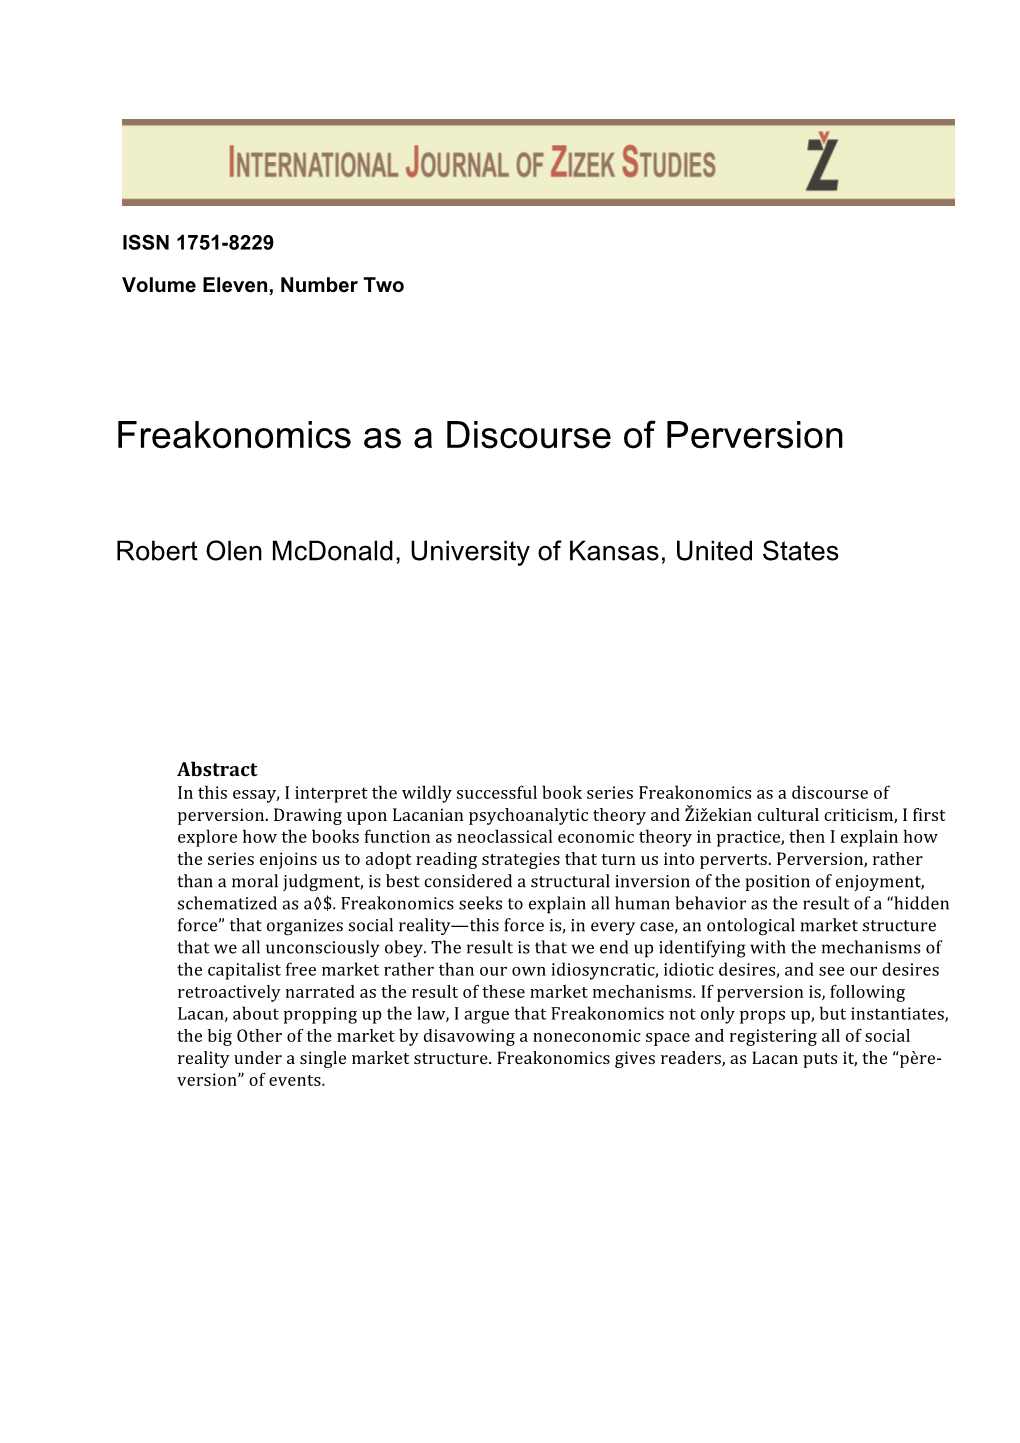 Freakonomics As a Discourse of Perversion